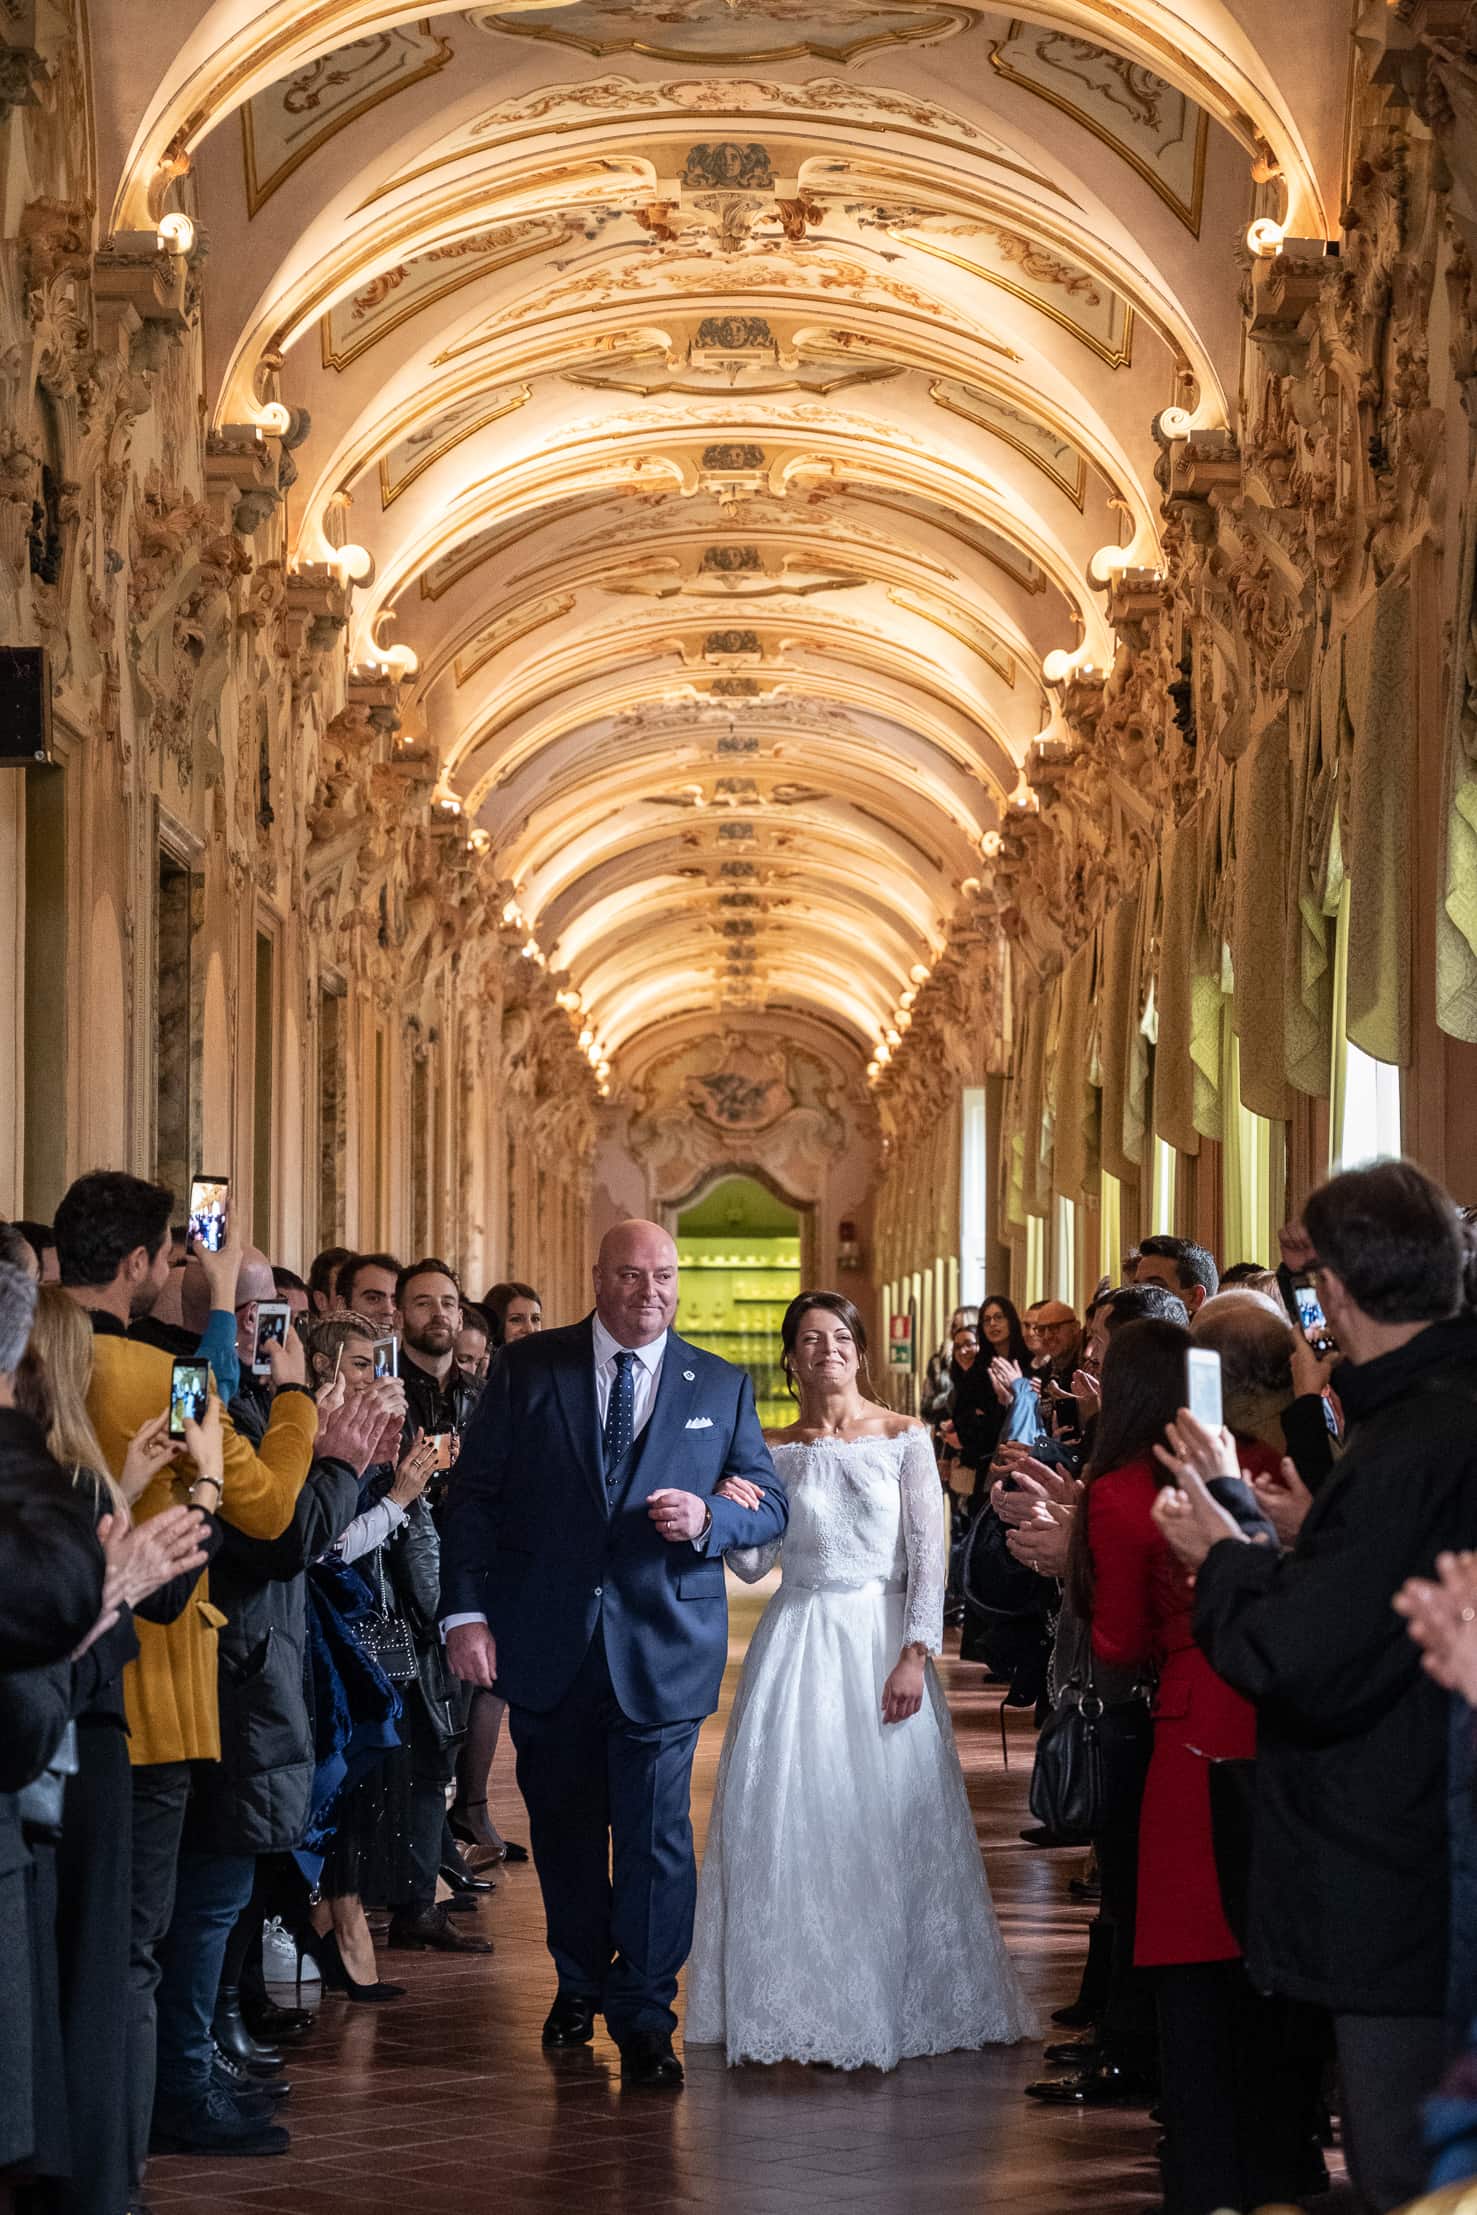 ingresso-cerimonia-civile-palazzo-storico-fotografo-matrimonio-milano